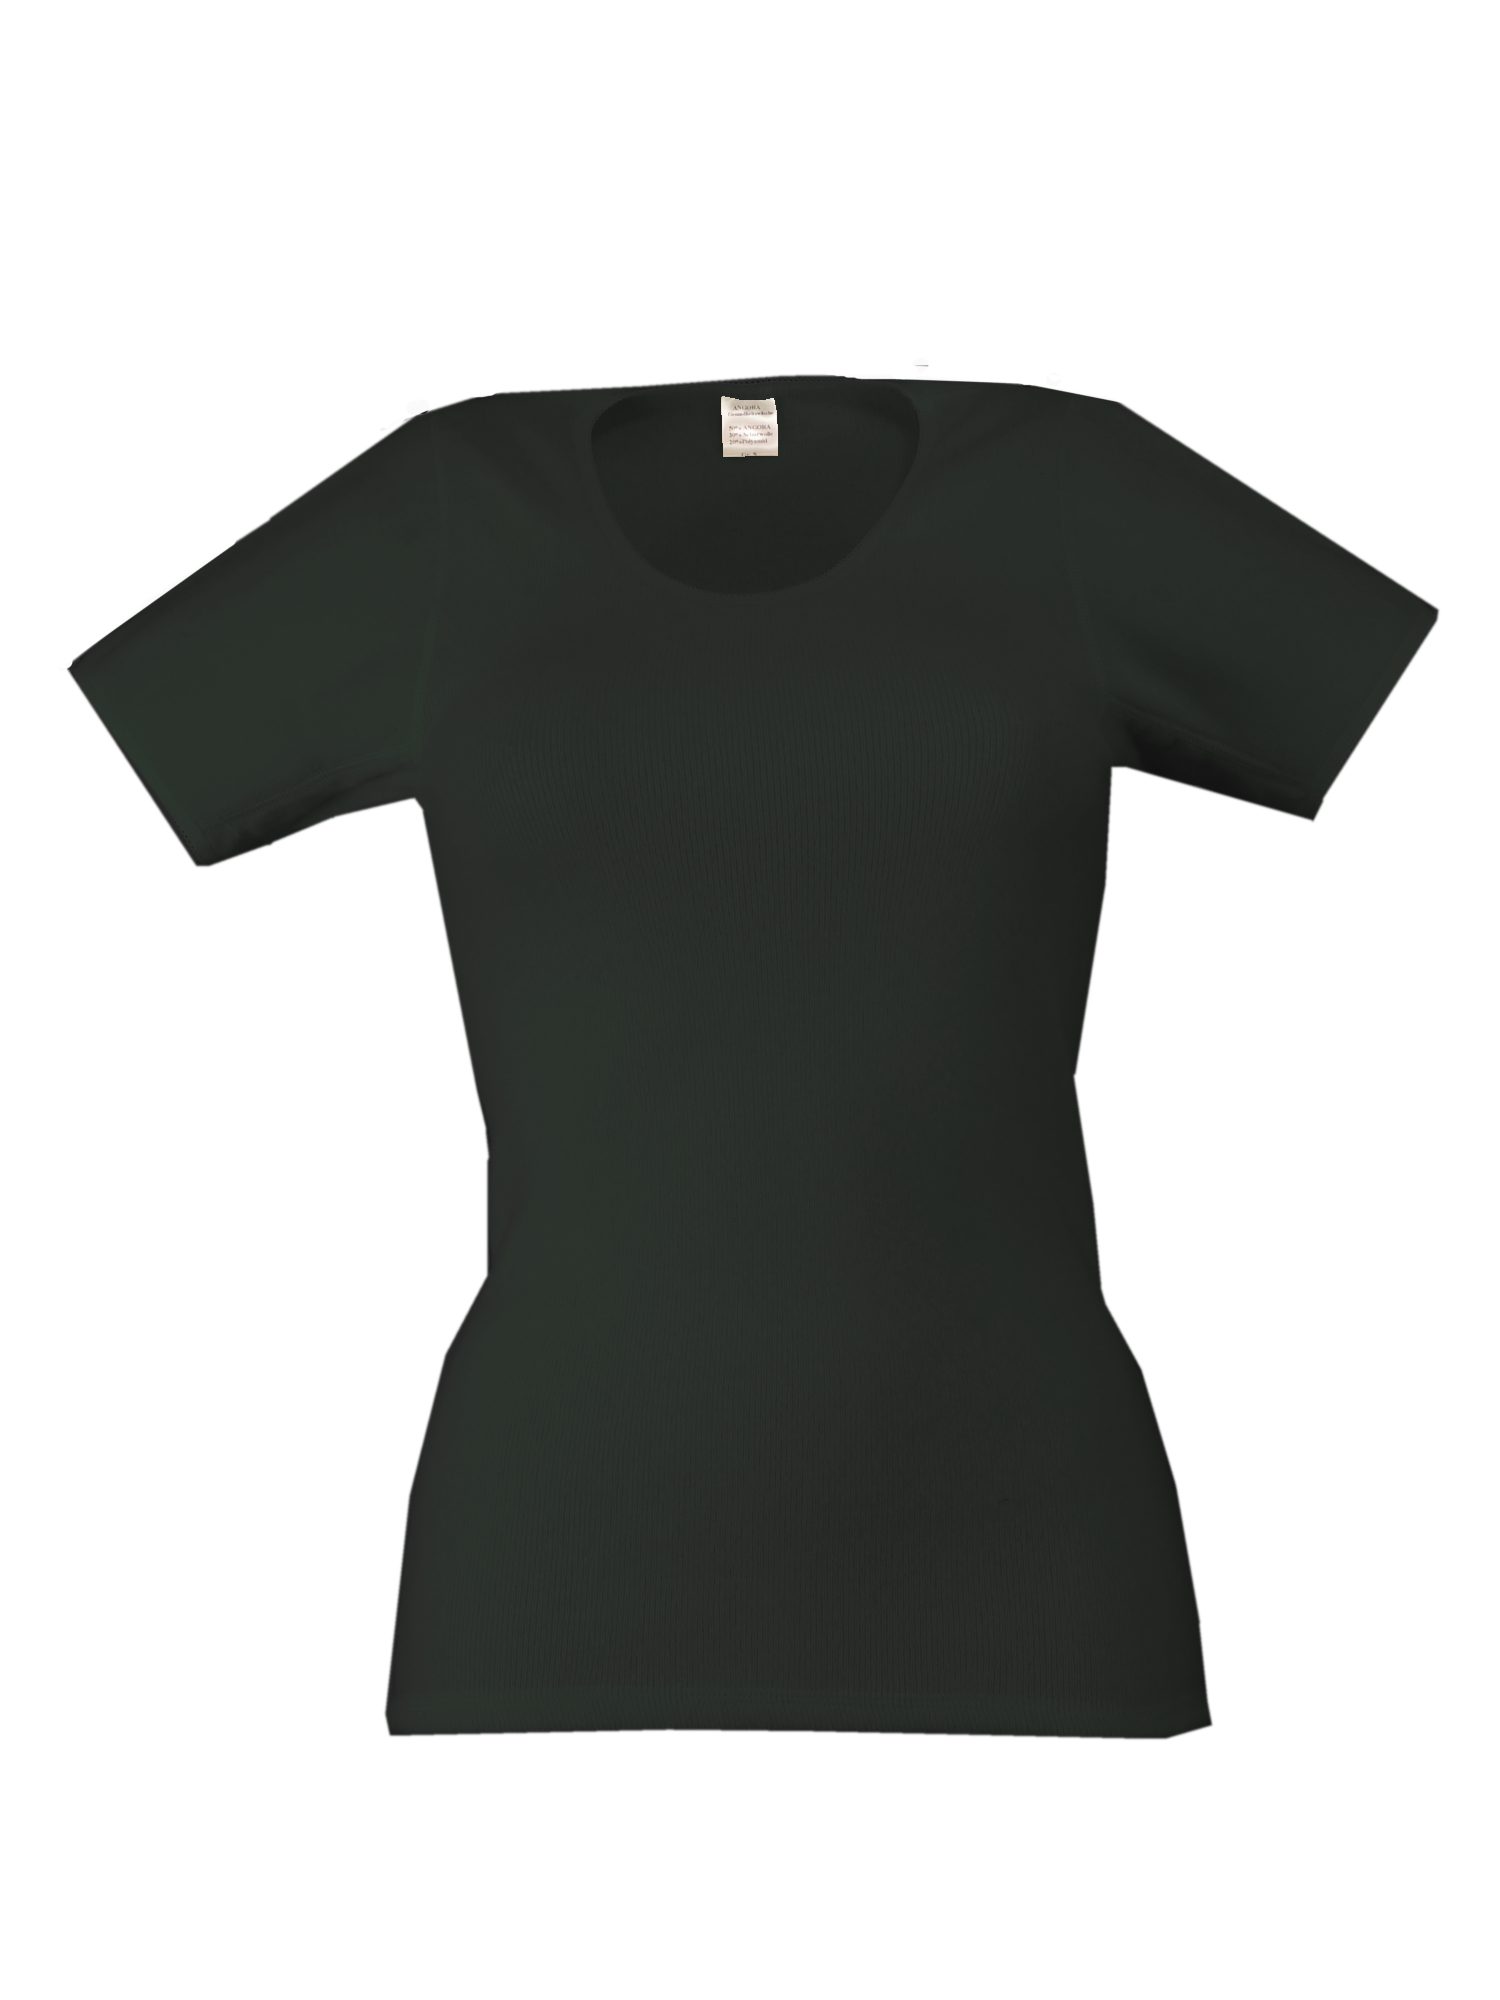 1/2 wobera schwarz Damenunterhemd NATUR NATUR wobera Unterhemd mit Kaschmir&Schurwolle Arm/T-Shirt